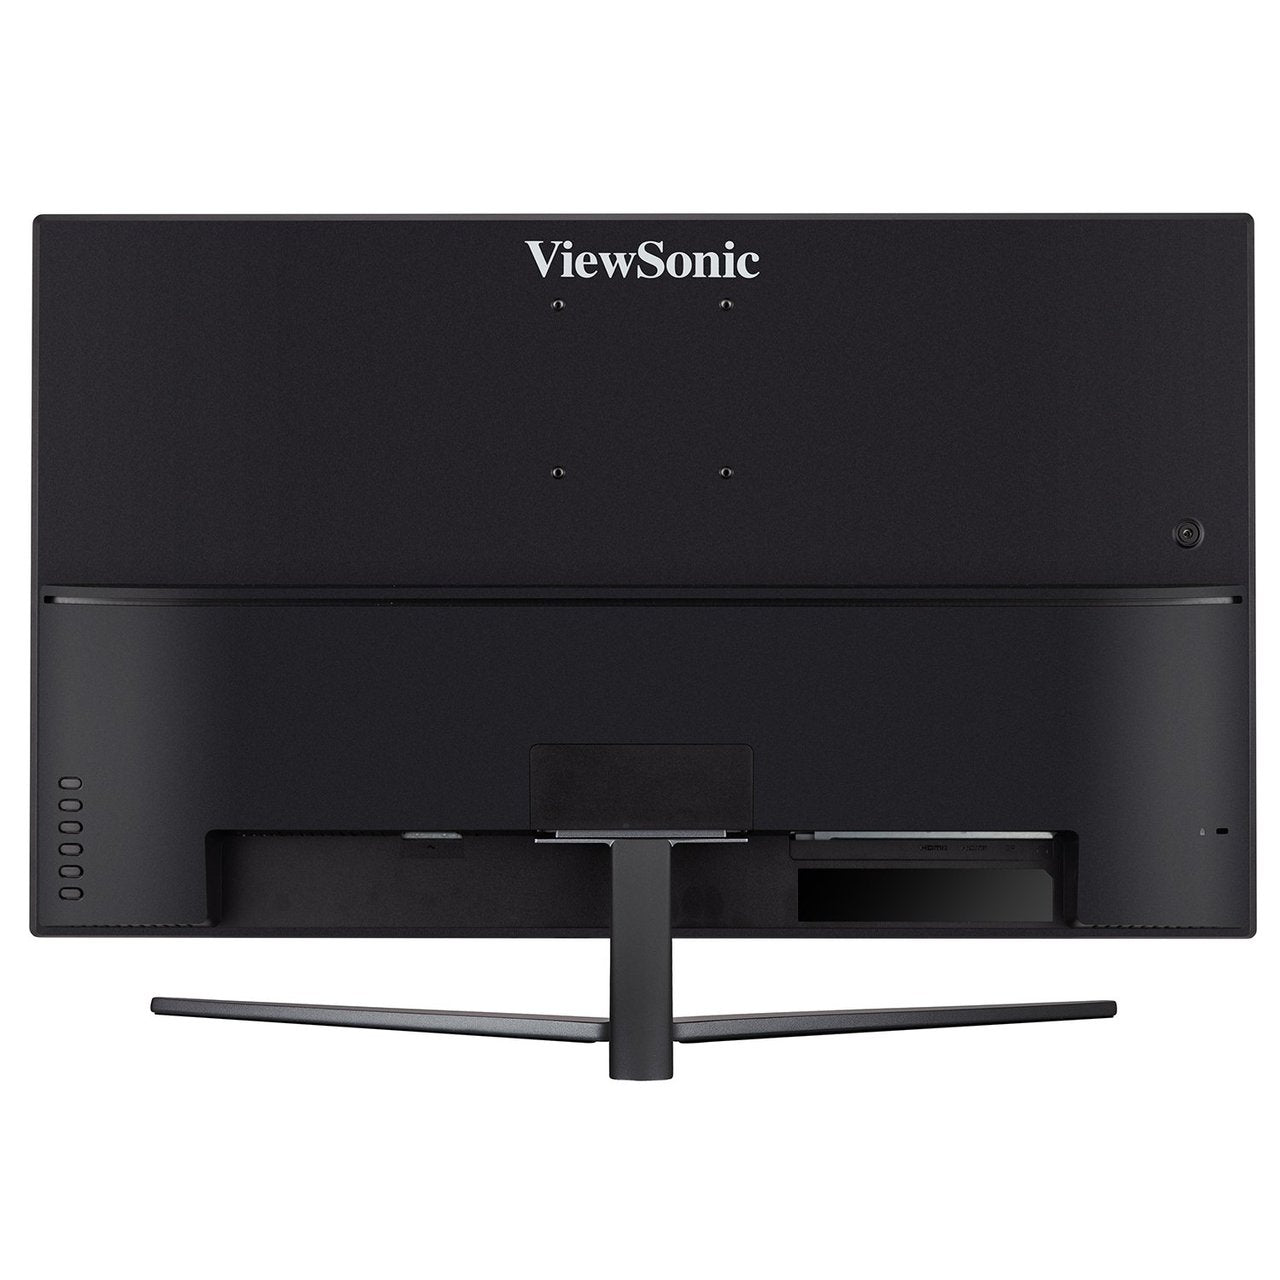 ViewSonic VX3211-4K-MHD-S 32" Widescreen 4K Monitor - Certified Refurbished